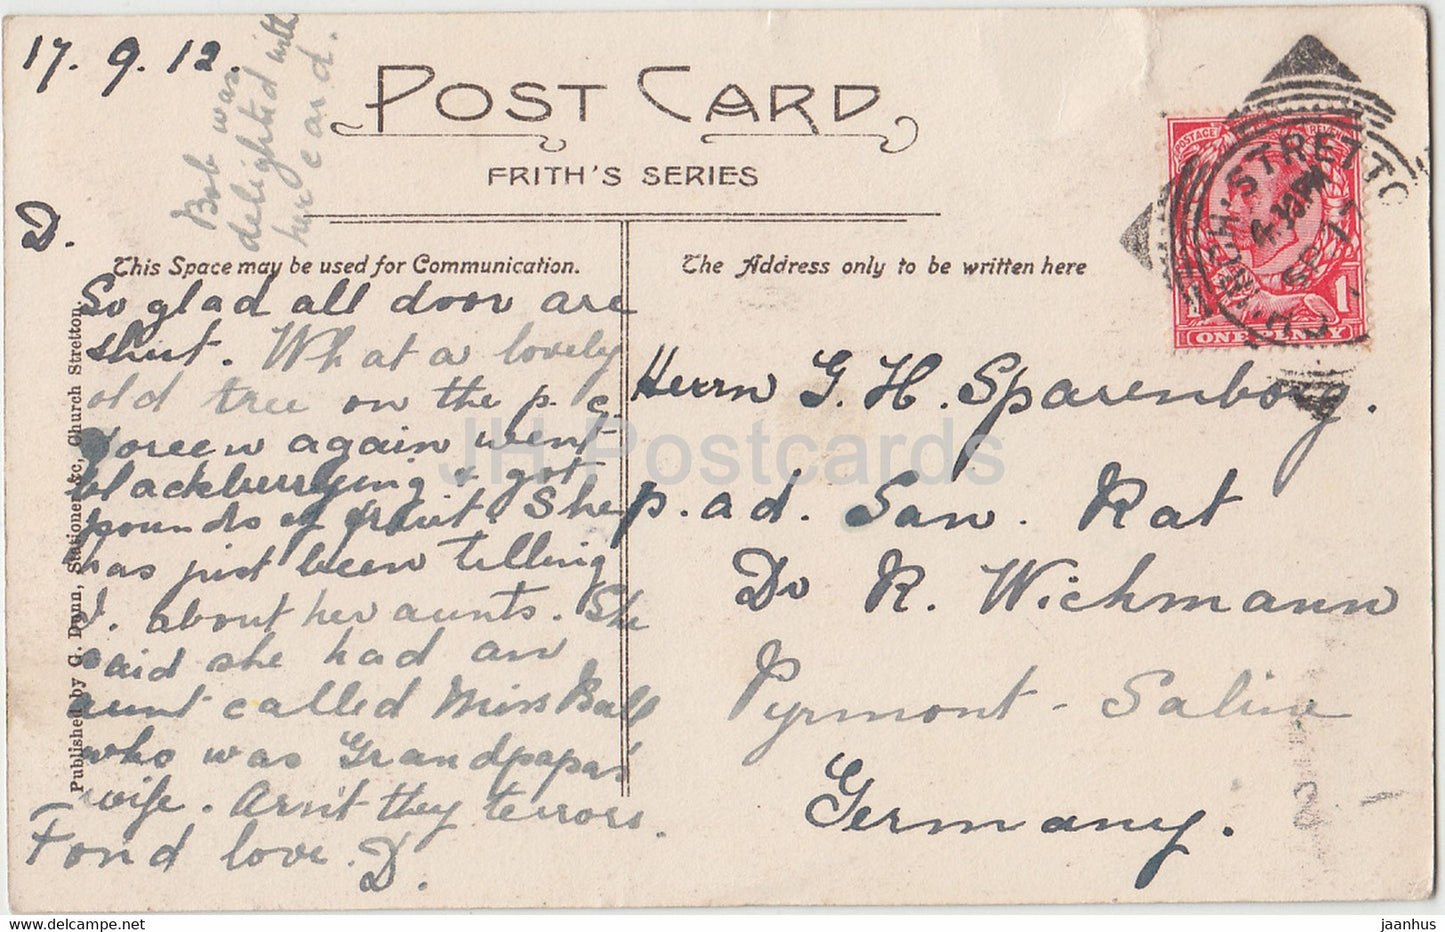 Church Stretton - Longmynd Hotel &amp; Caradoc - alte Postkarte - England - 1912 - Vereinigtes Königreich - gebraucht